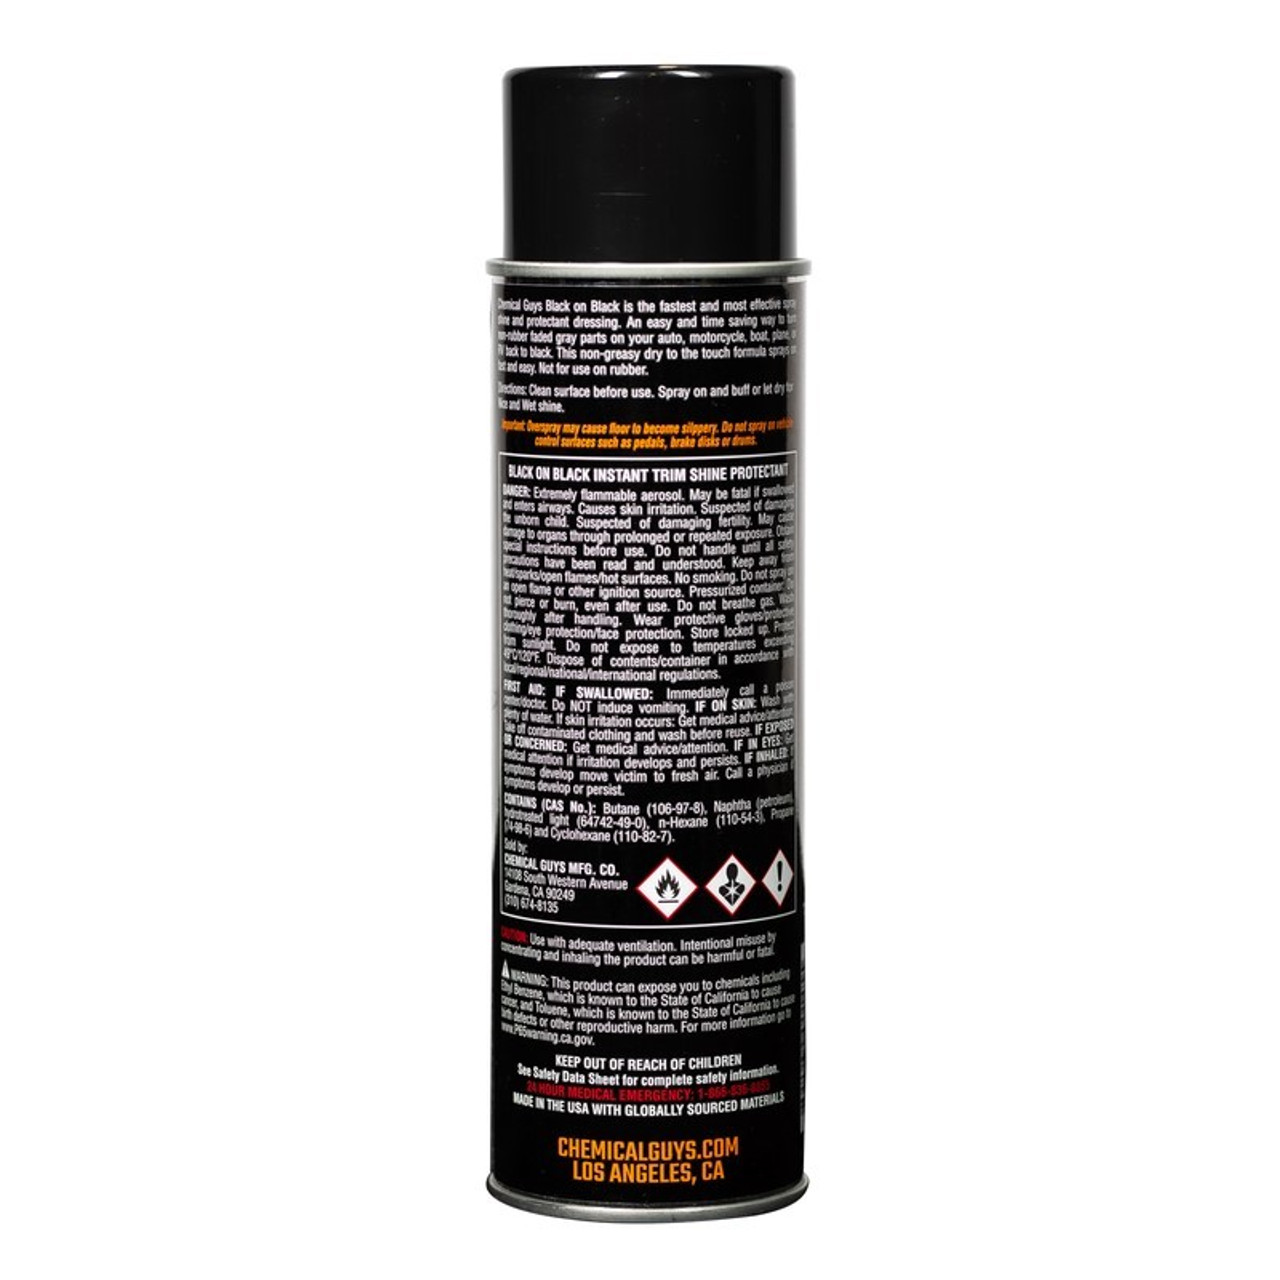 Chemical Guys Black on Black Instant Trim Shine Spray Dressing - Information Label